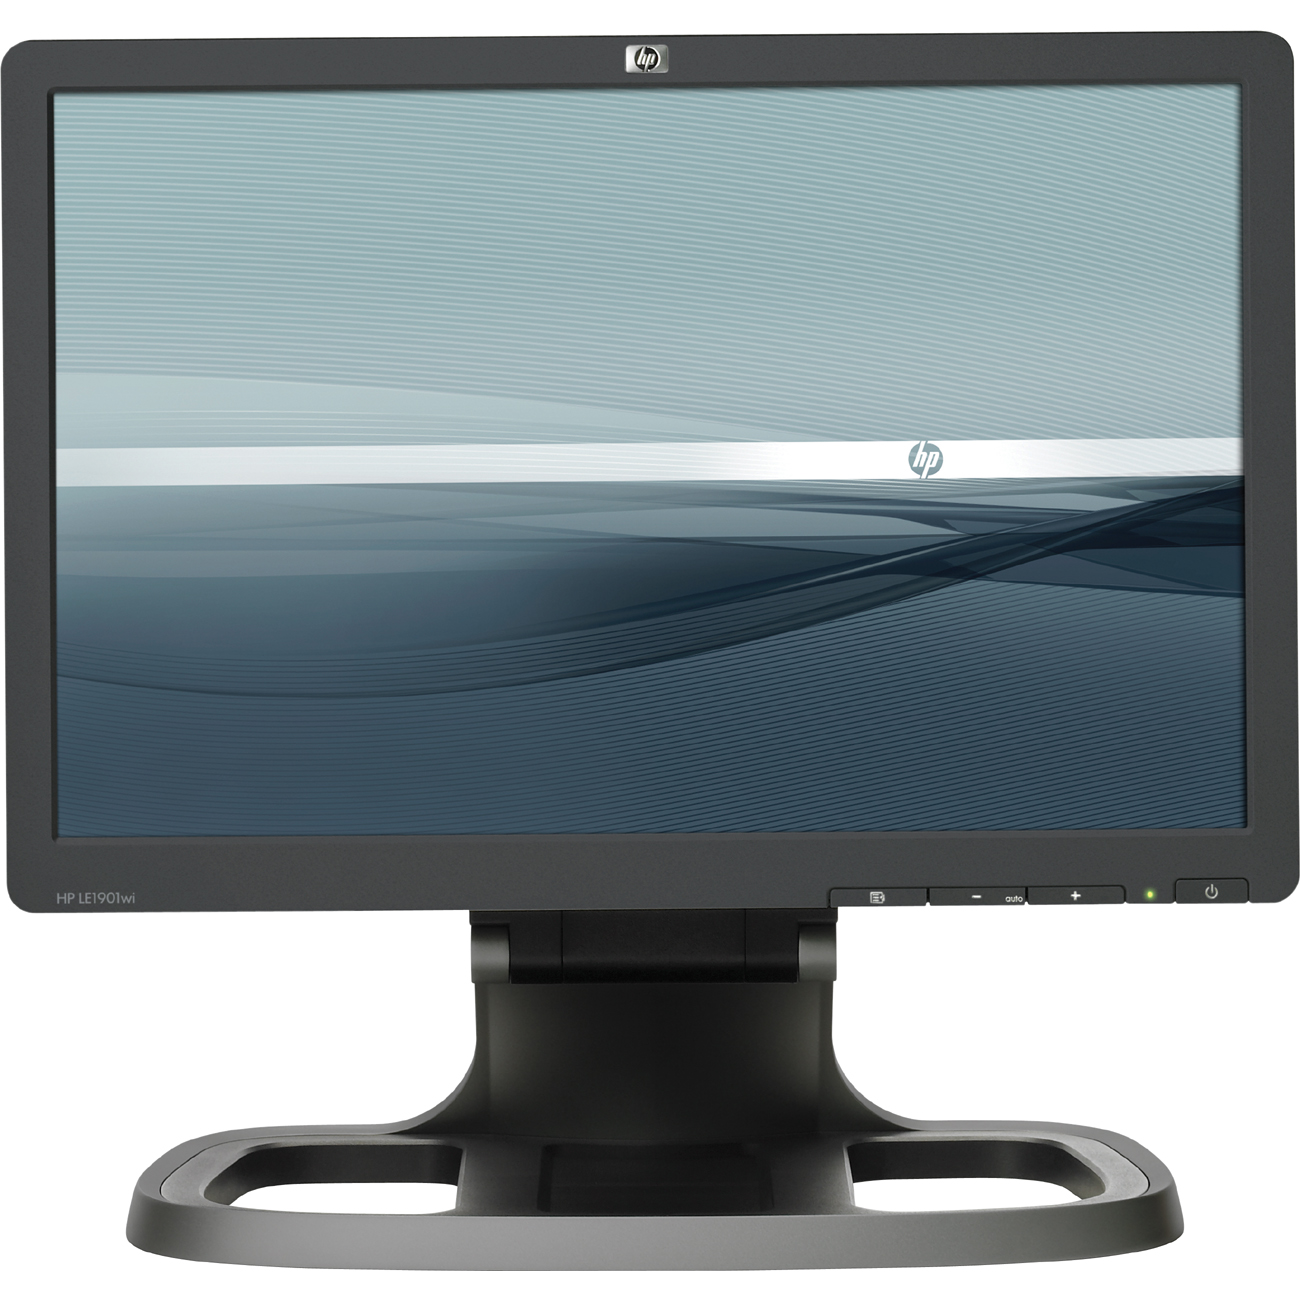 HP LE1901wi Black 19" 5ms  Height,Swivel,Pivot & Tilt Adjustable  Widescreen LCD Monitor 250 cd/m2 1000:1